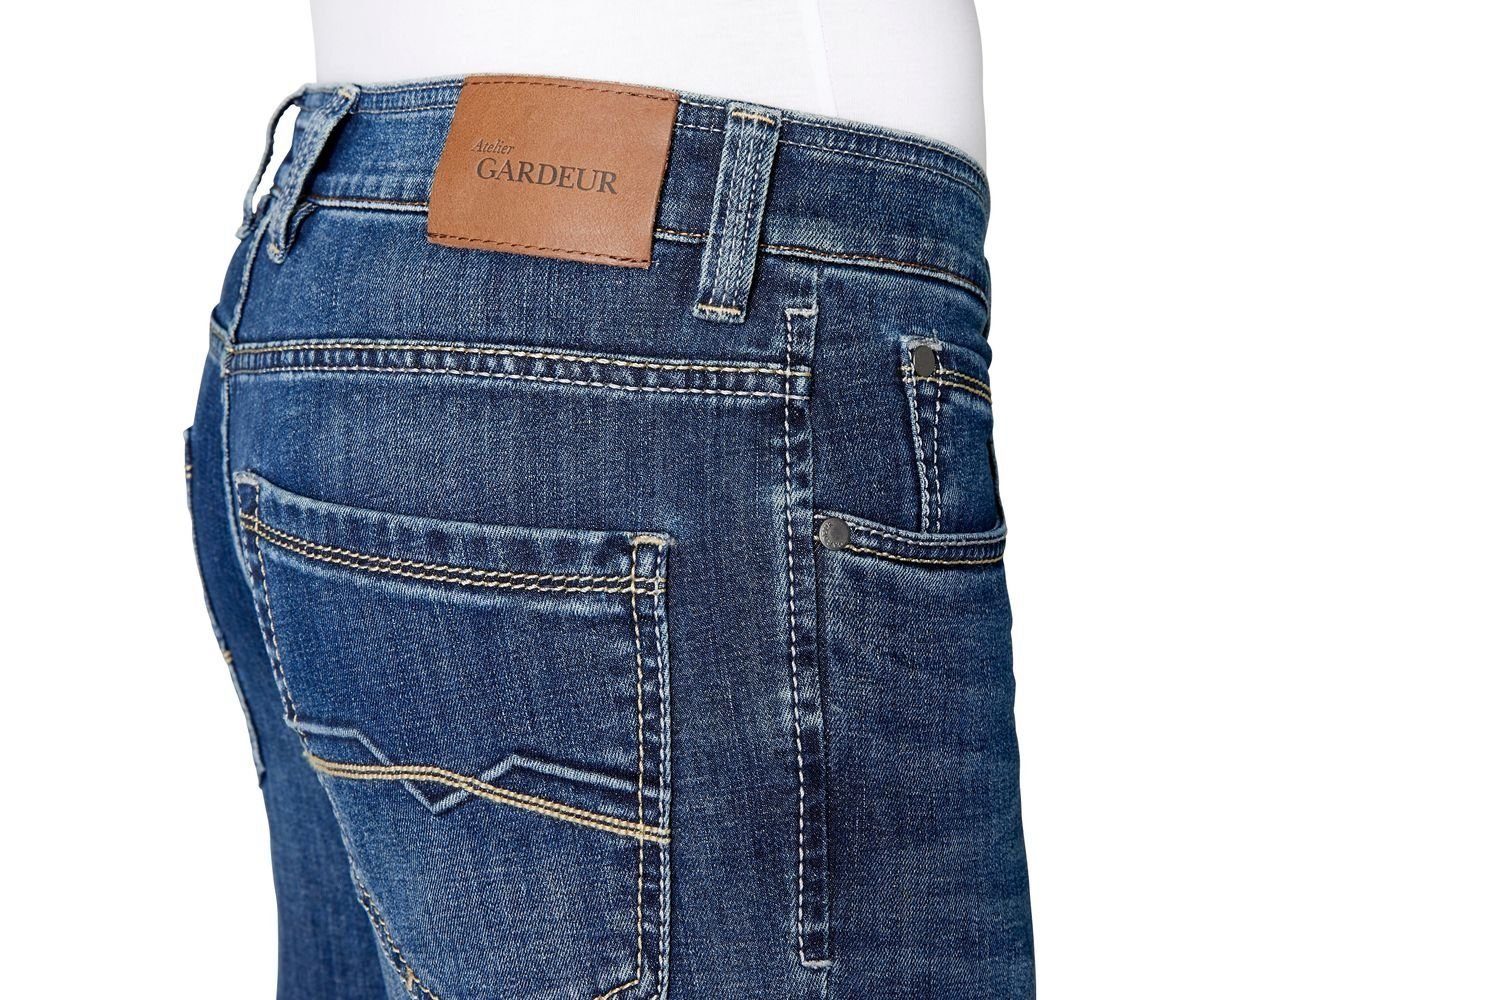 stone 5-Pocket-Jeans GARDEUR Atelier blue Batu-2 used Denim Superflex